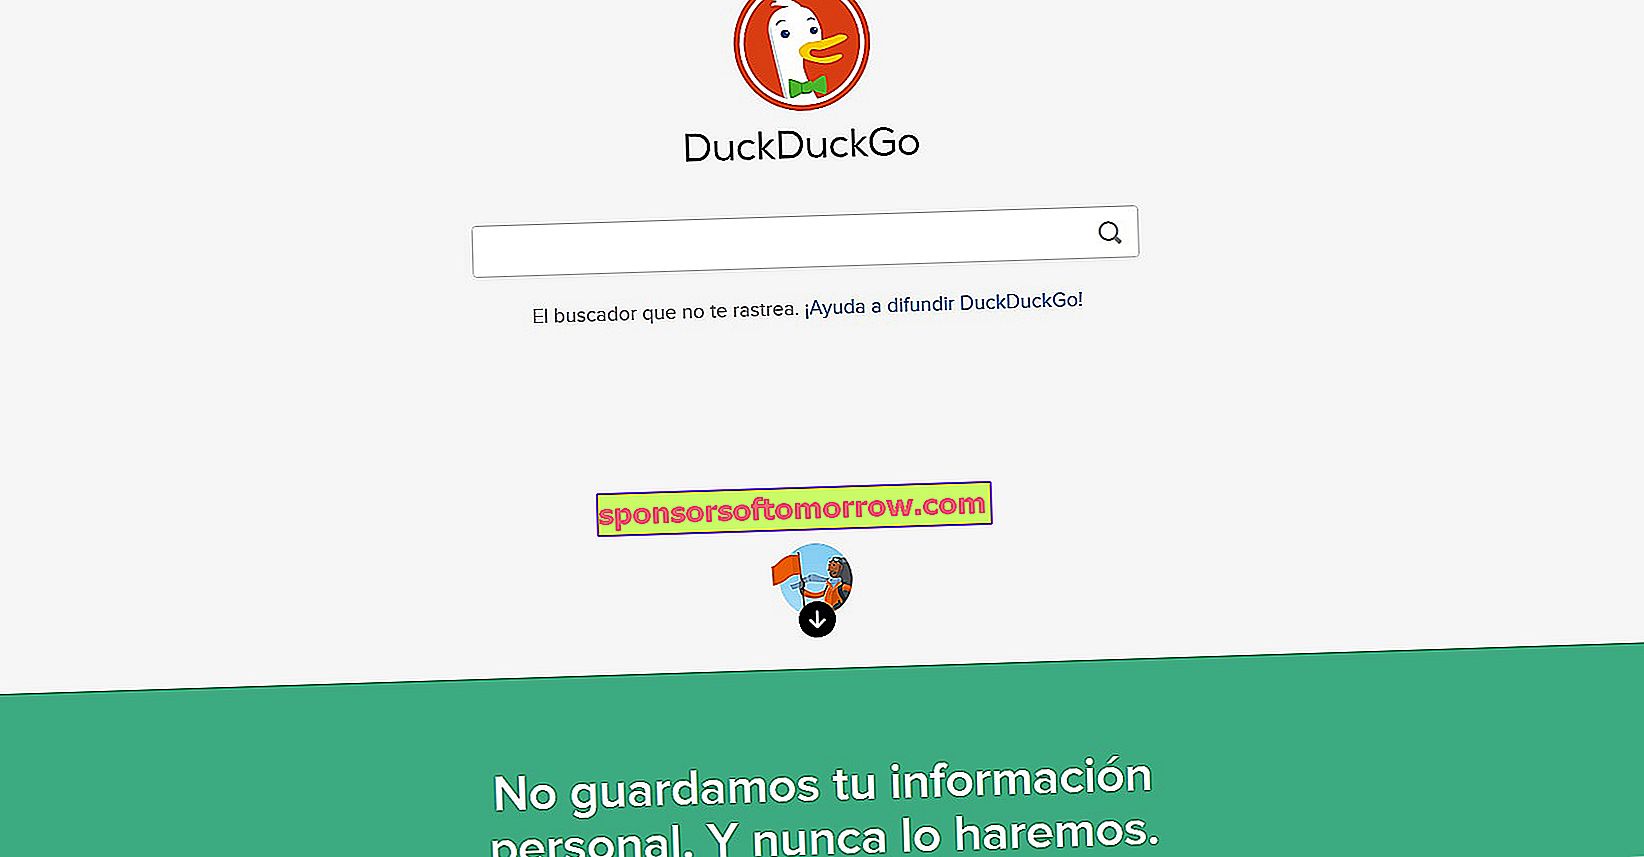 DuckDuckGo, an alternative to Google